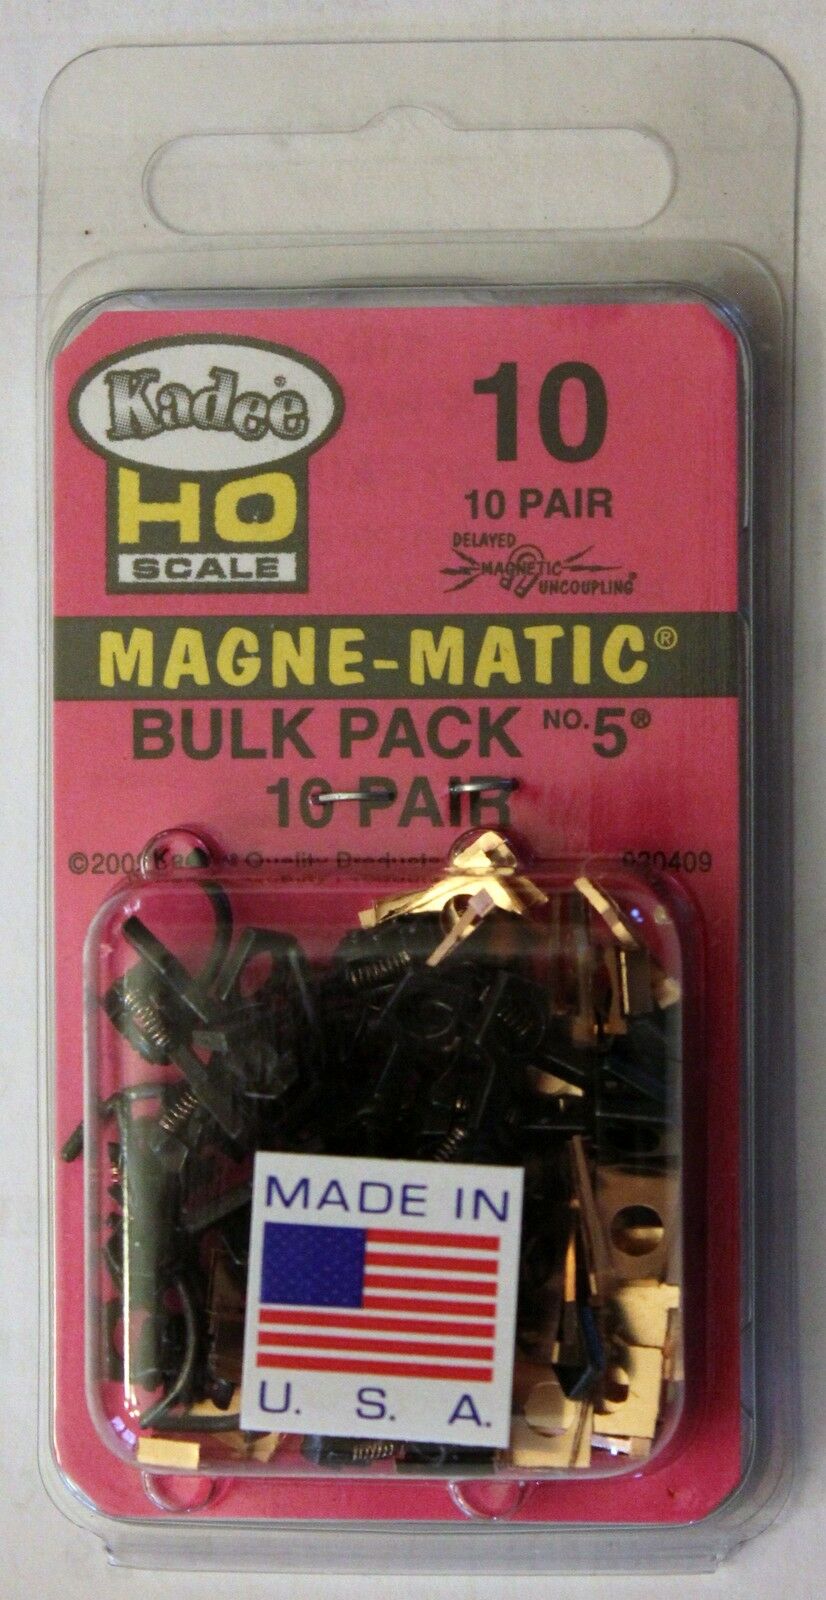 Ho Scale - Kadee 10 - #5 Magne-matic Bulk Pack - 10 Pair Standard Head Couplers